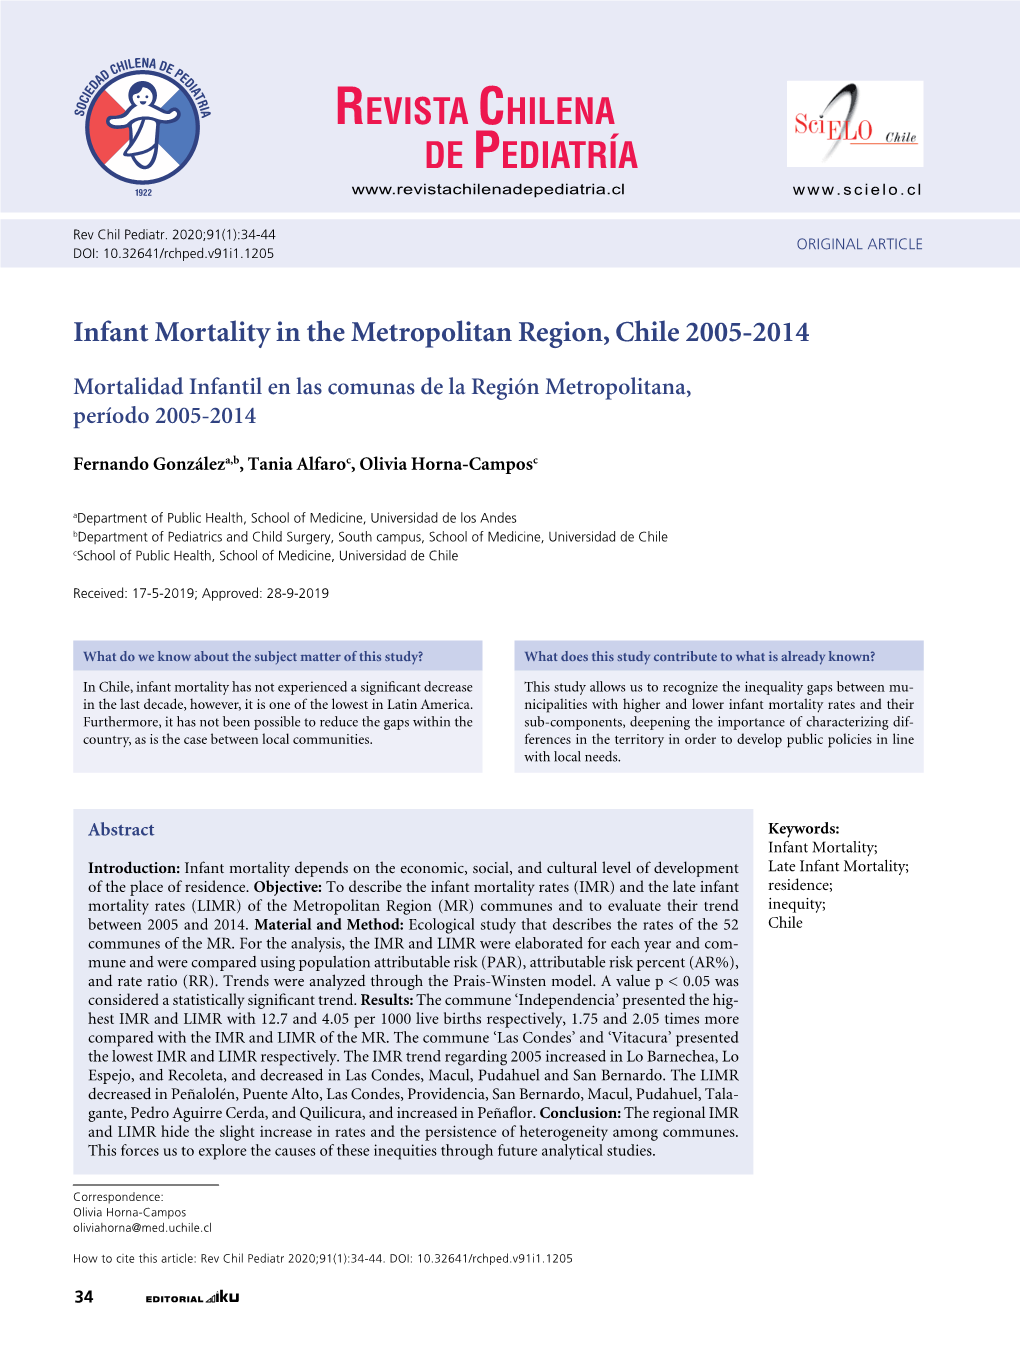 Infant Mortality in the Metropolitan Region, Chile 2005-2014